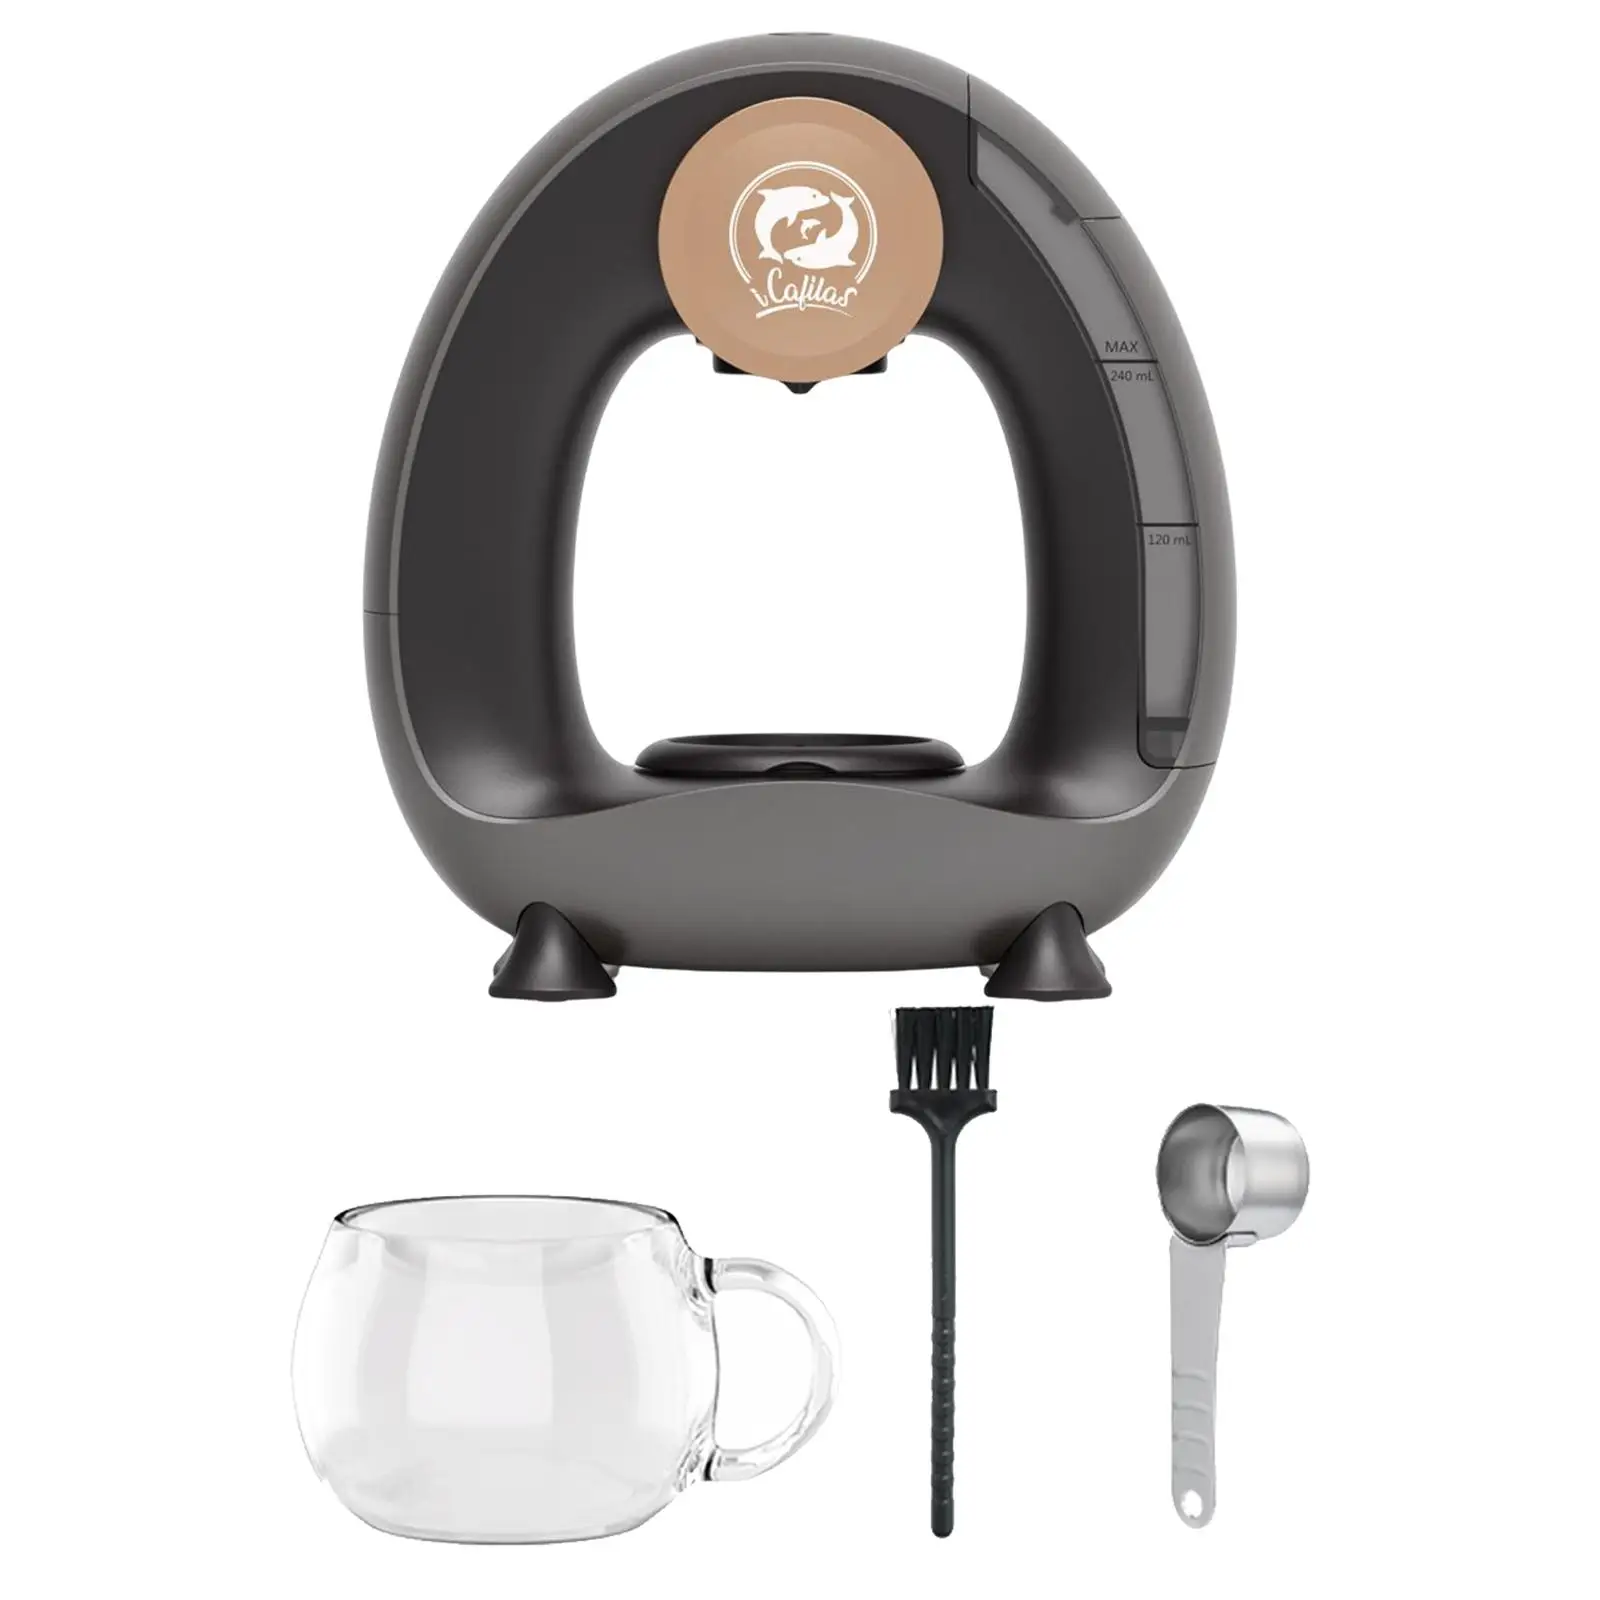 Coffee Maker Sturdy Detachable with Brush Durable Mini EU Plug Espresso Machine for Home Office Camping Travel